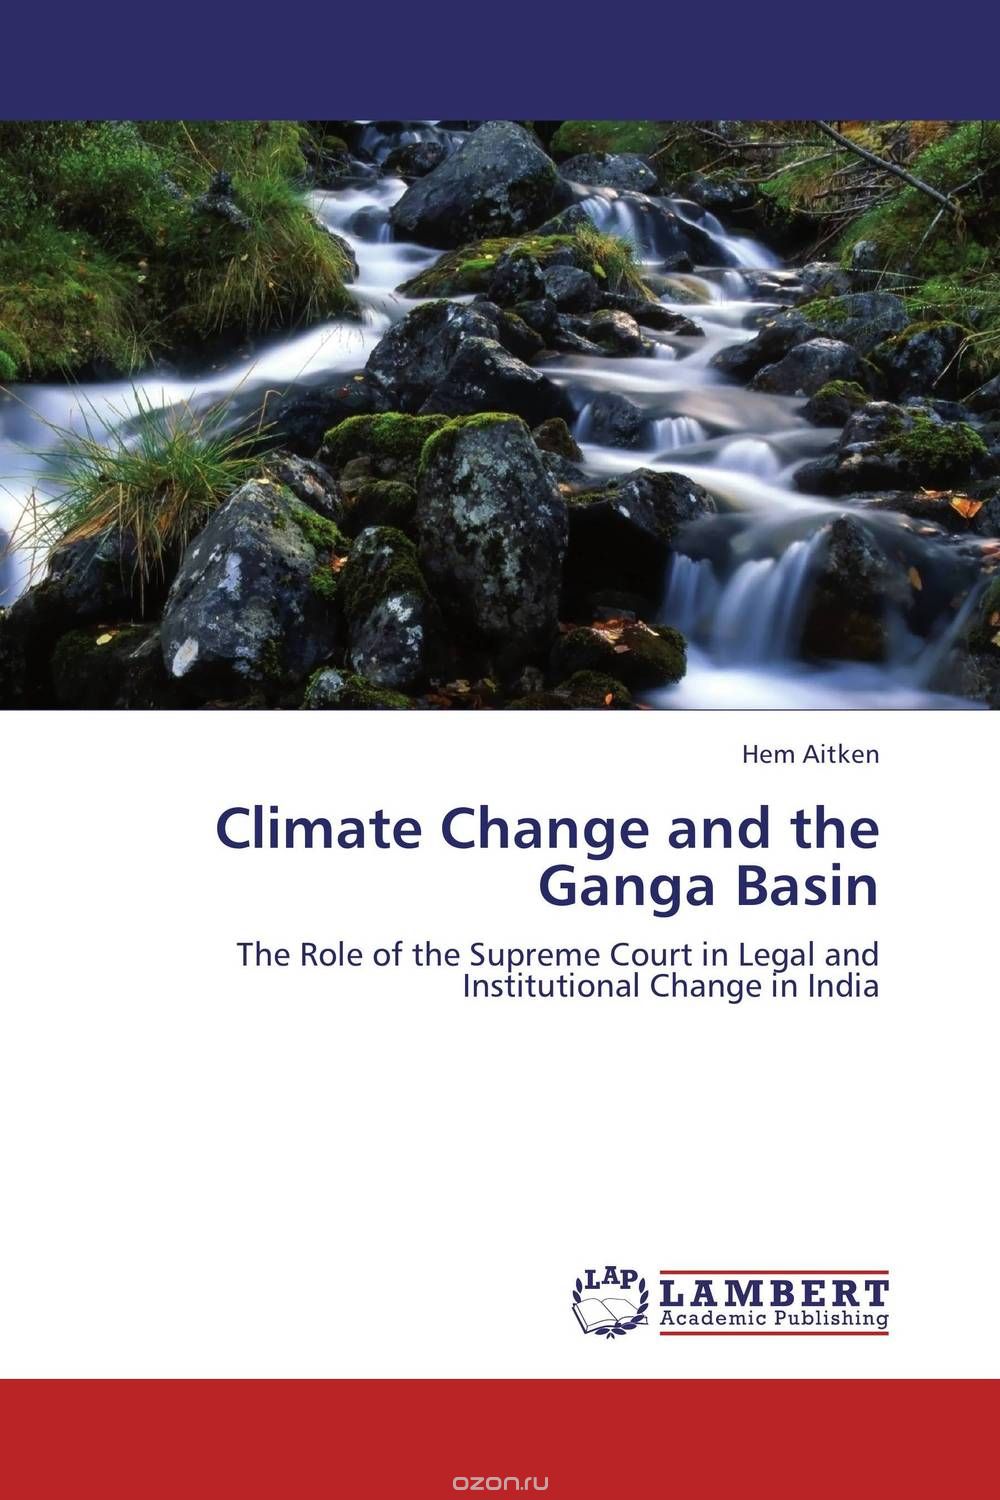 Скачать книгу "Climate Change and the Ganga Basin"